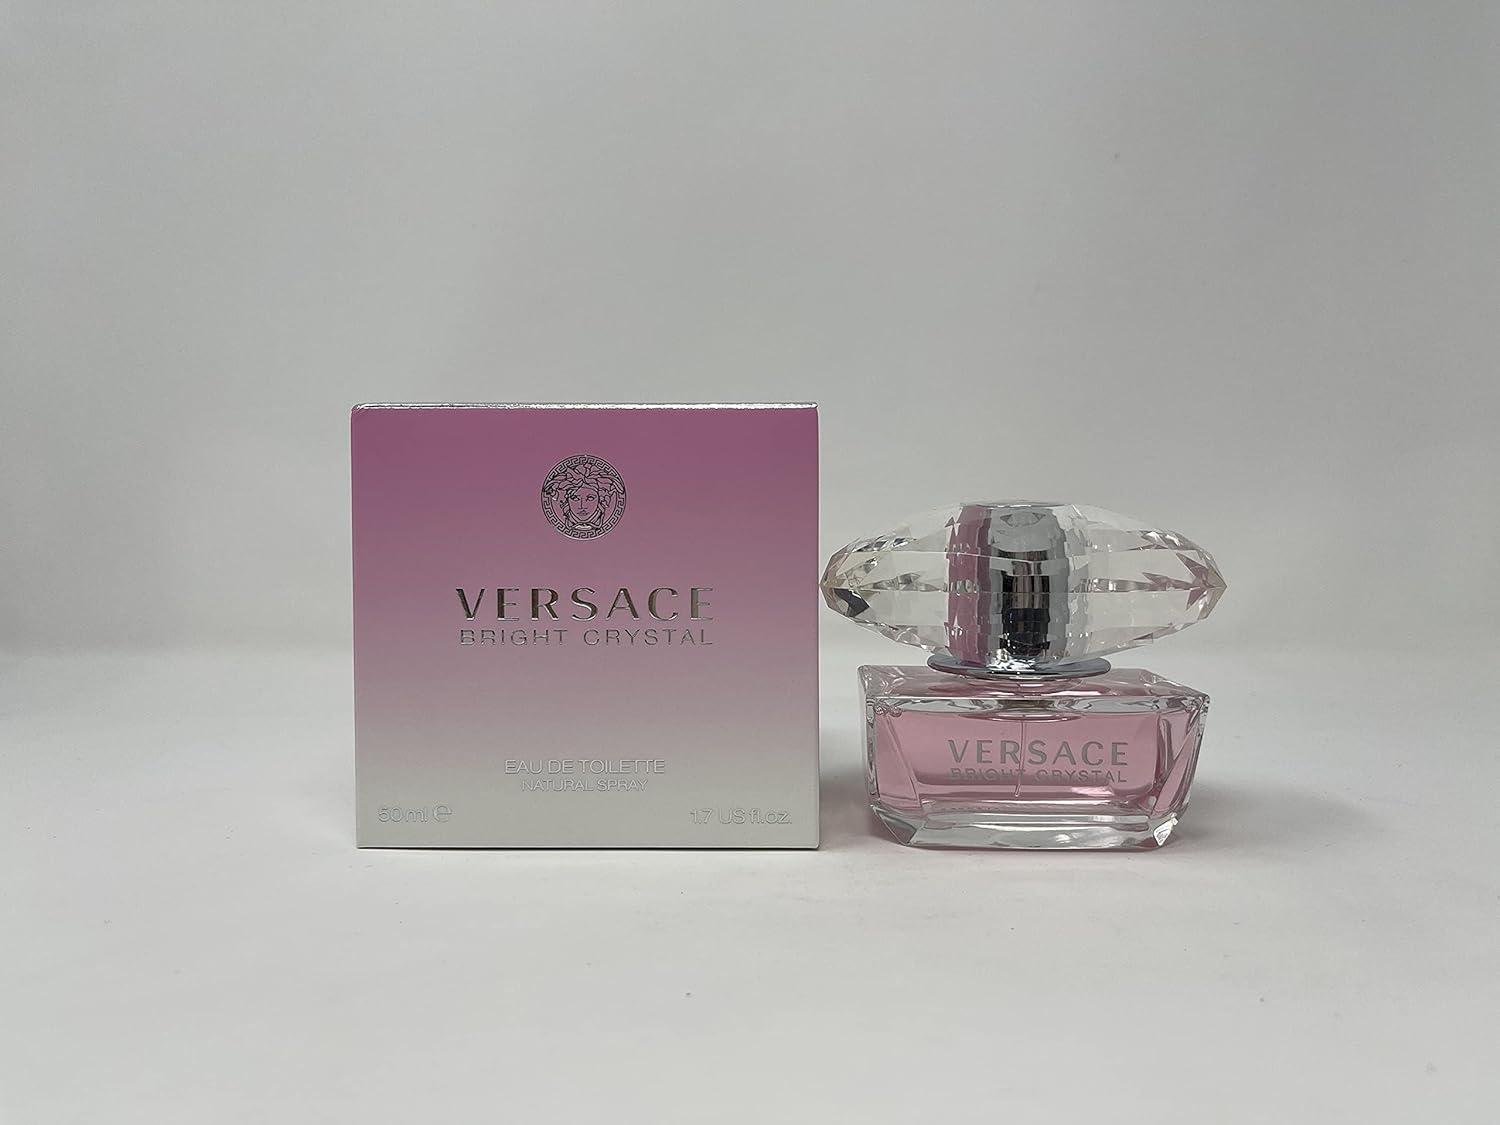 Versace Bright Crystal Eau de Toilette Natural Spray 90ml, Pink, 145893